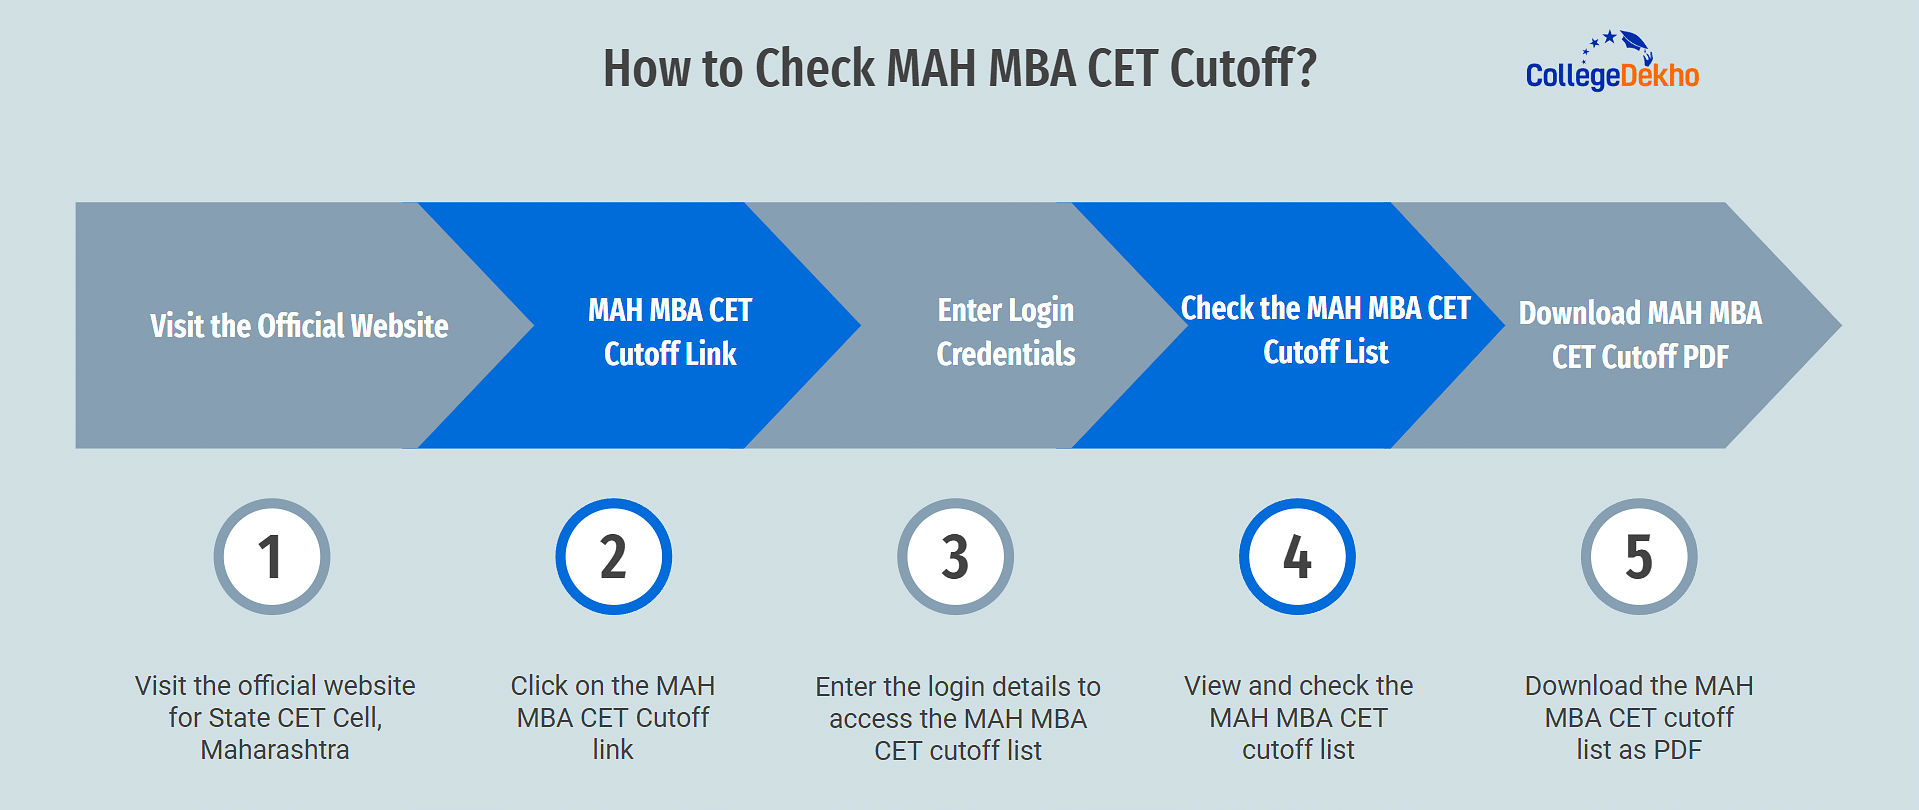 How to Check MAH MBA CET Cutoff